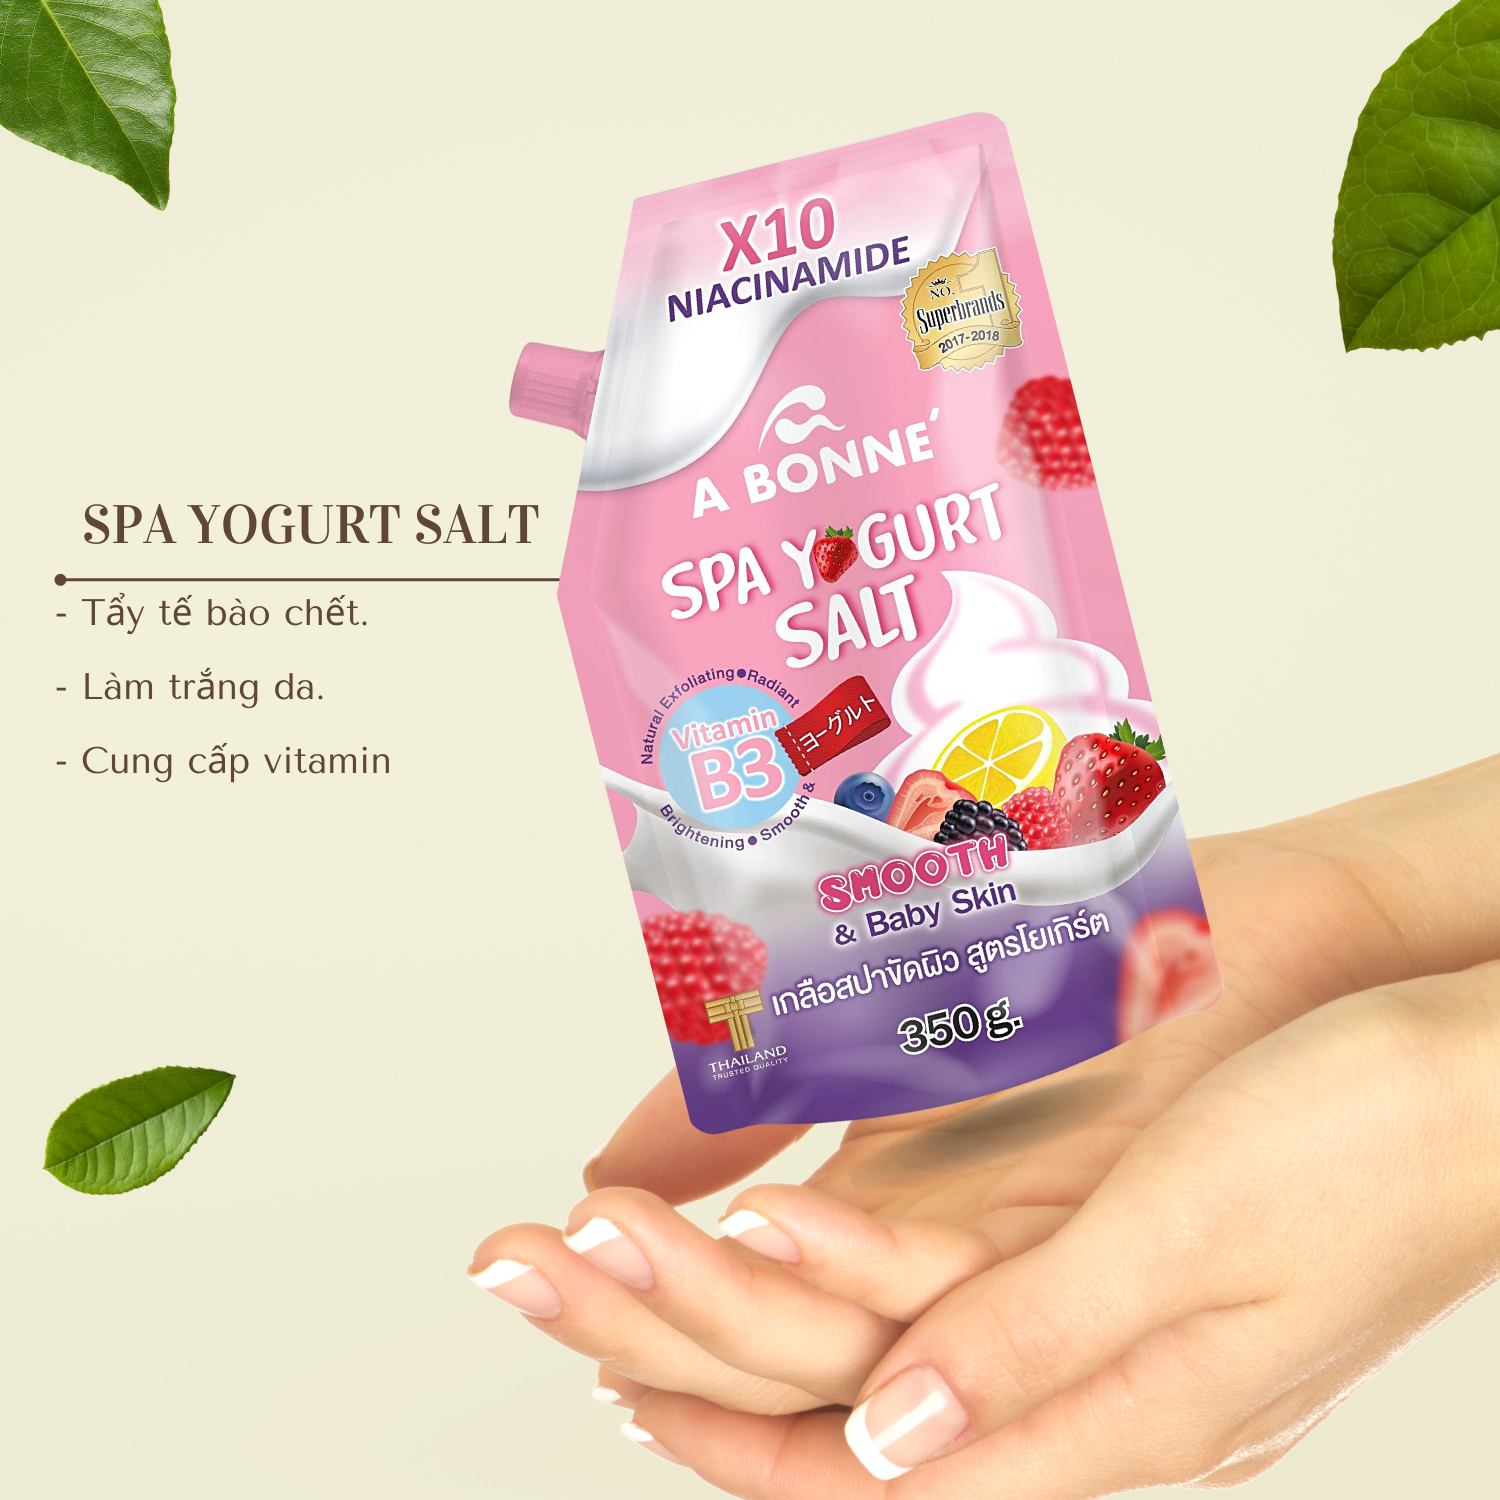 Muối Tắm Sữa Chua A Bonne Tẩy Da Tế Bào Chết  Body Spa Yogurt Salt Thái Lan 350gr